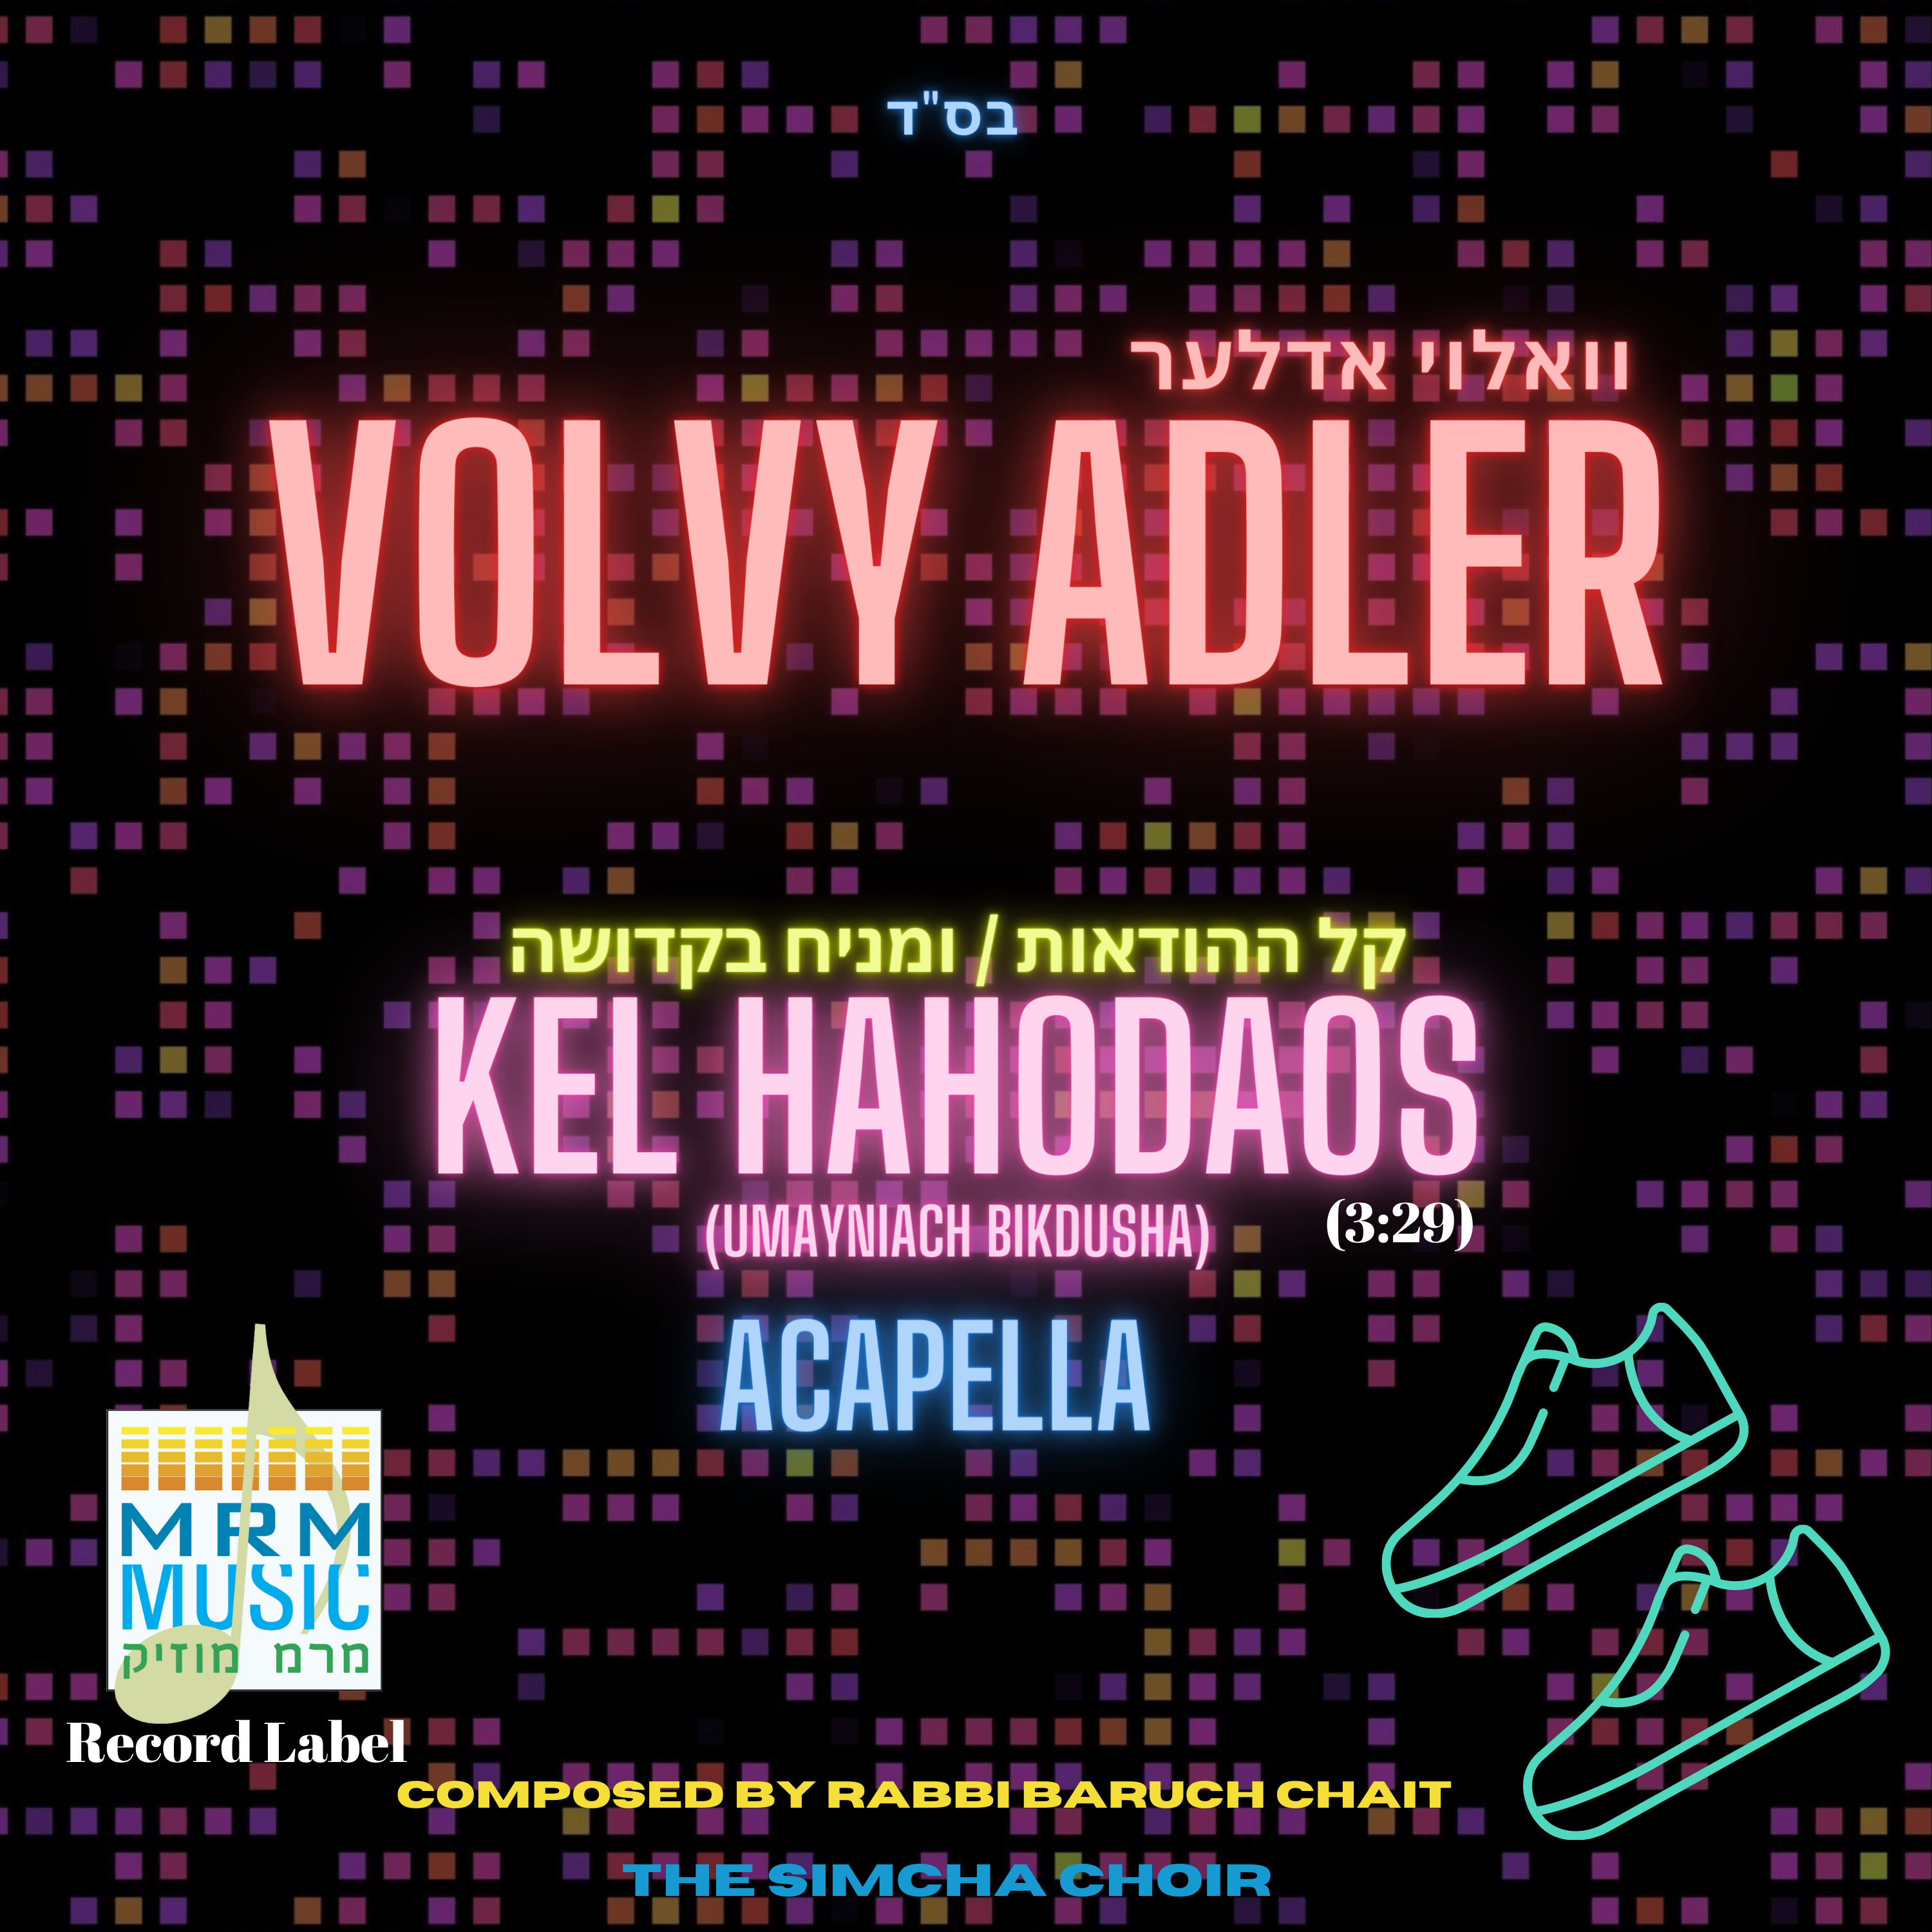 Volvy Adler - Kel Hahodaos/Umayniach Bikdusha (Acapella) (Single)